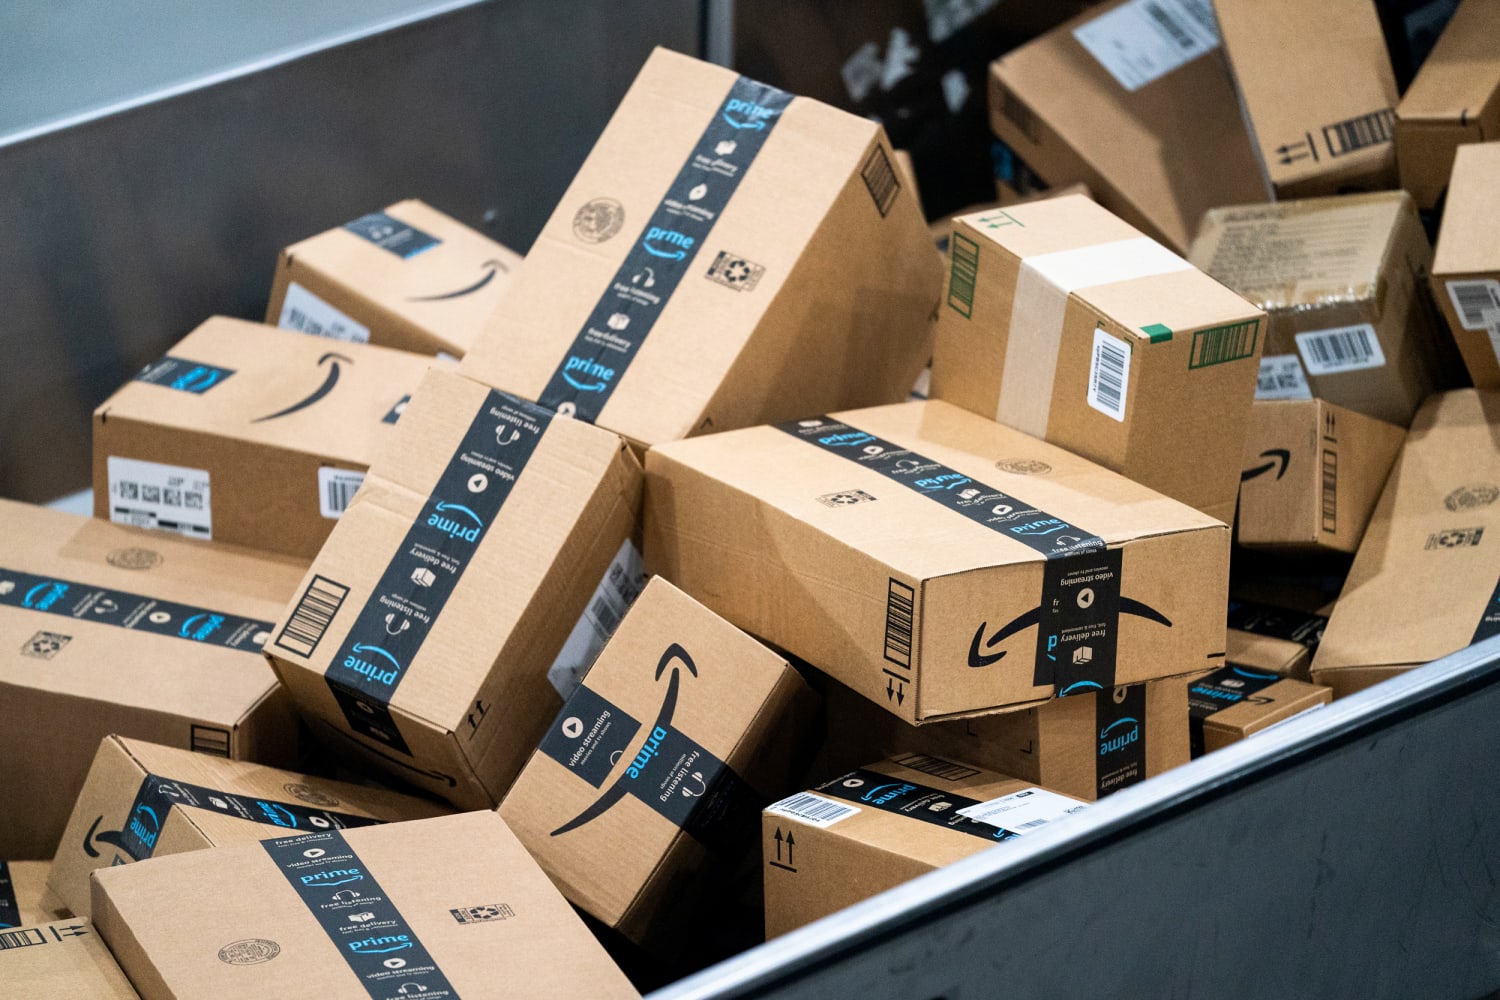 Amazon discontinues charity donation program amid cost cuts